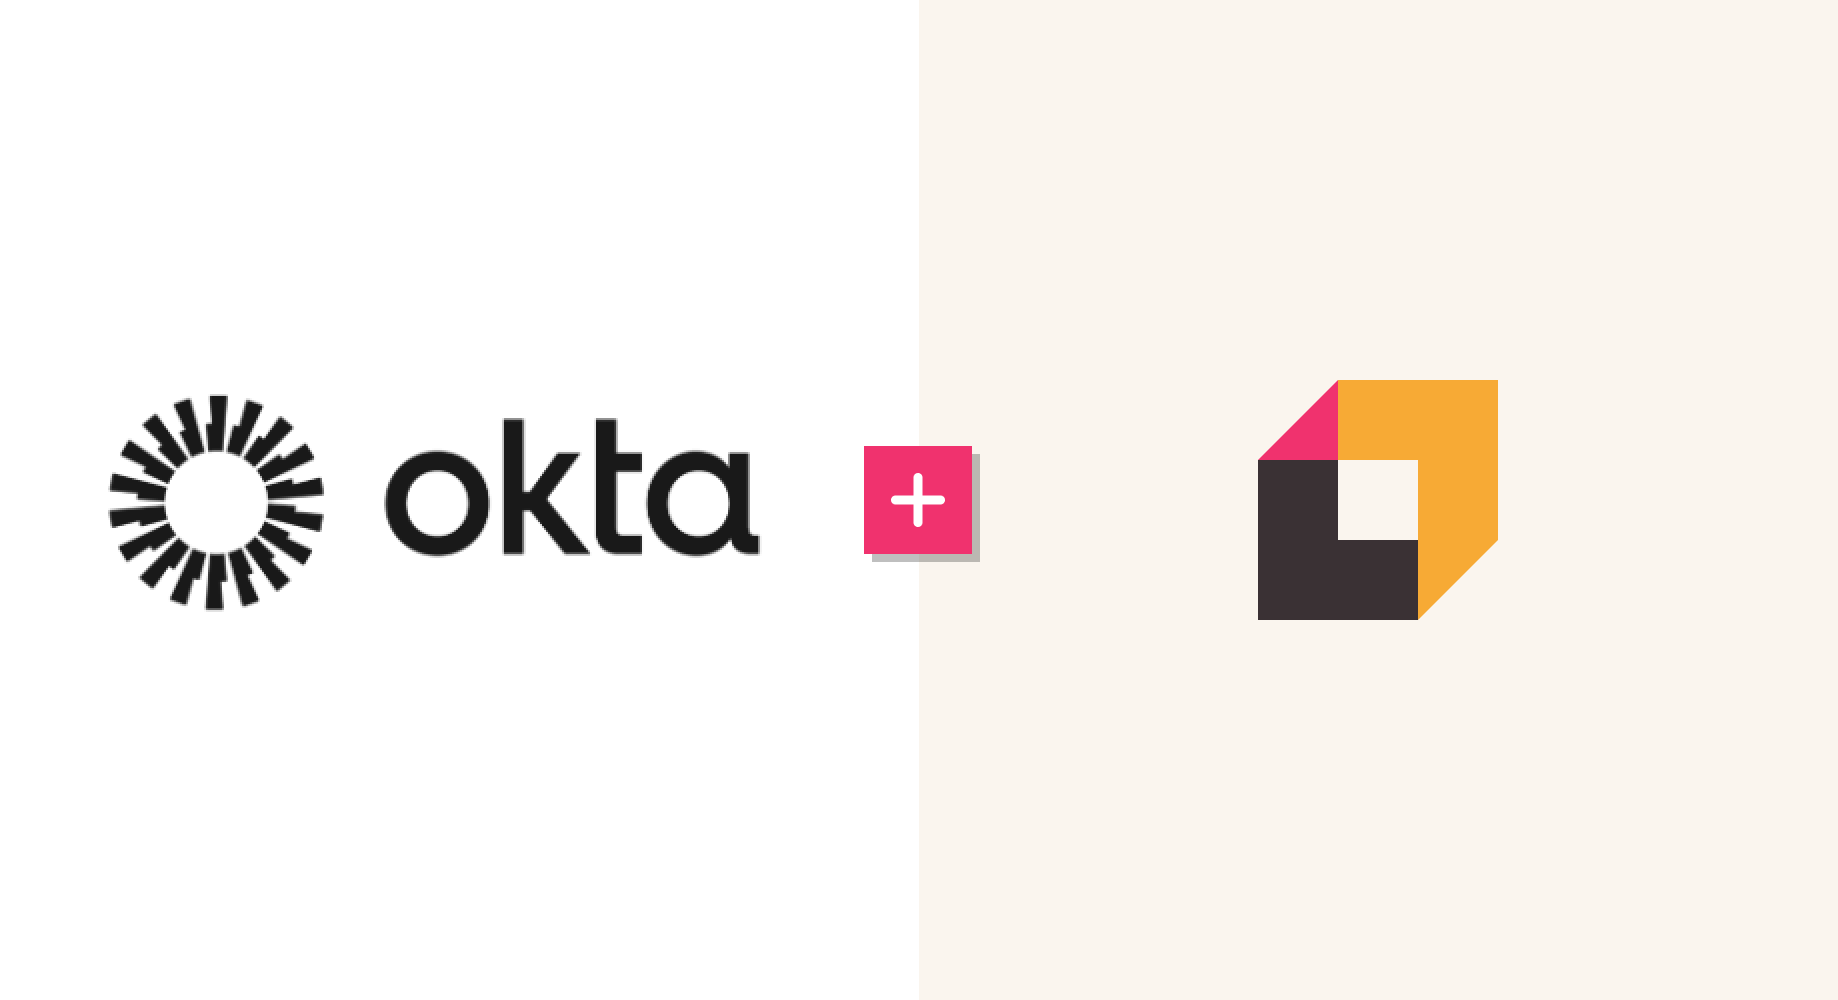 Okta logo and Glean logo side by side